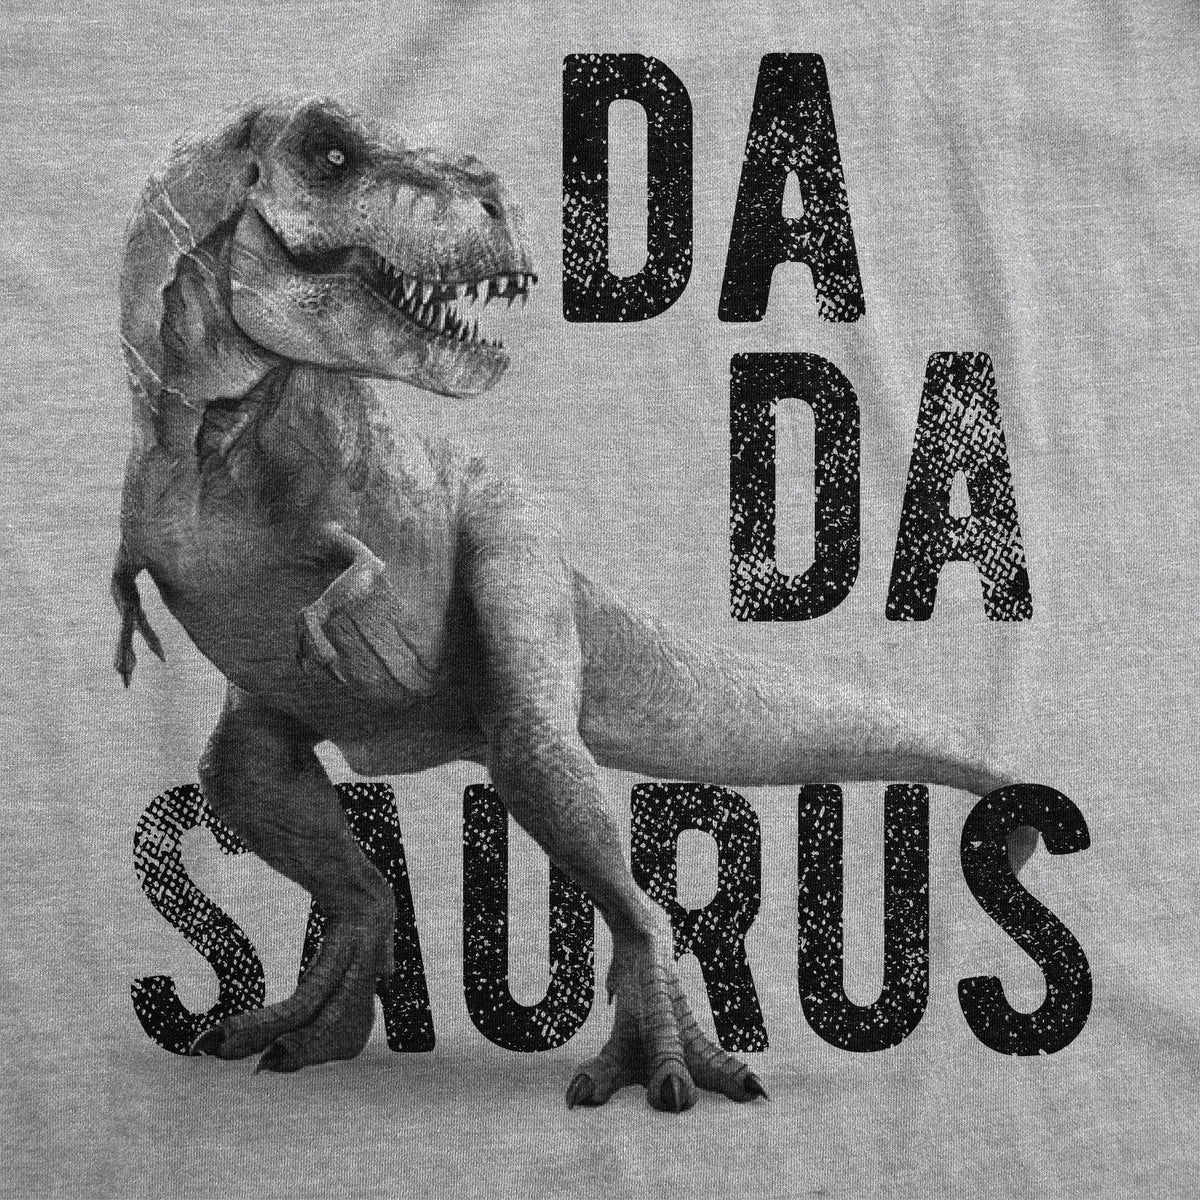 T-Rex Dadasaurus Men&#39;s Tshirt - Crazy Dog T-Shirts